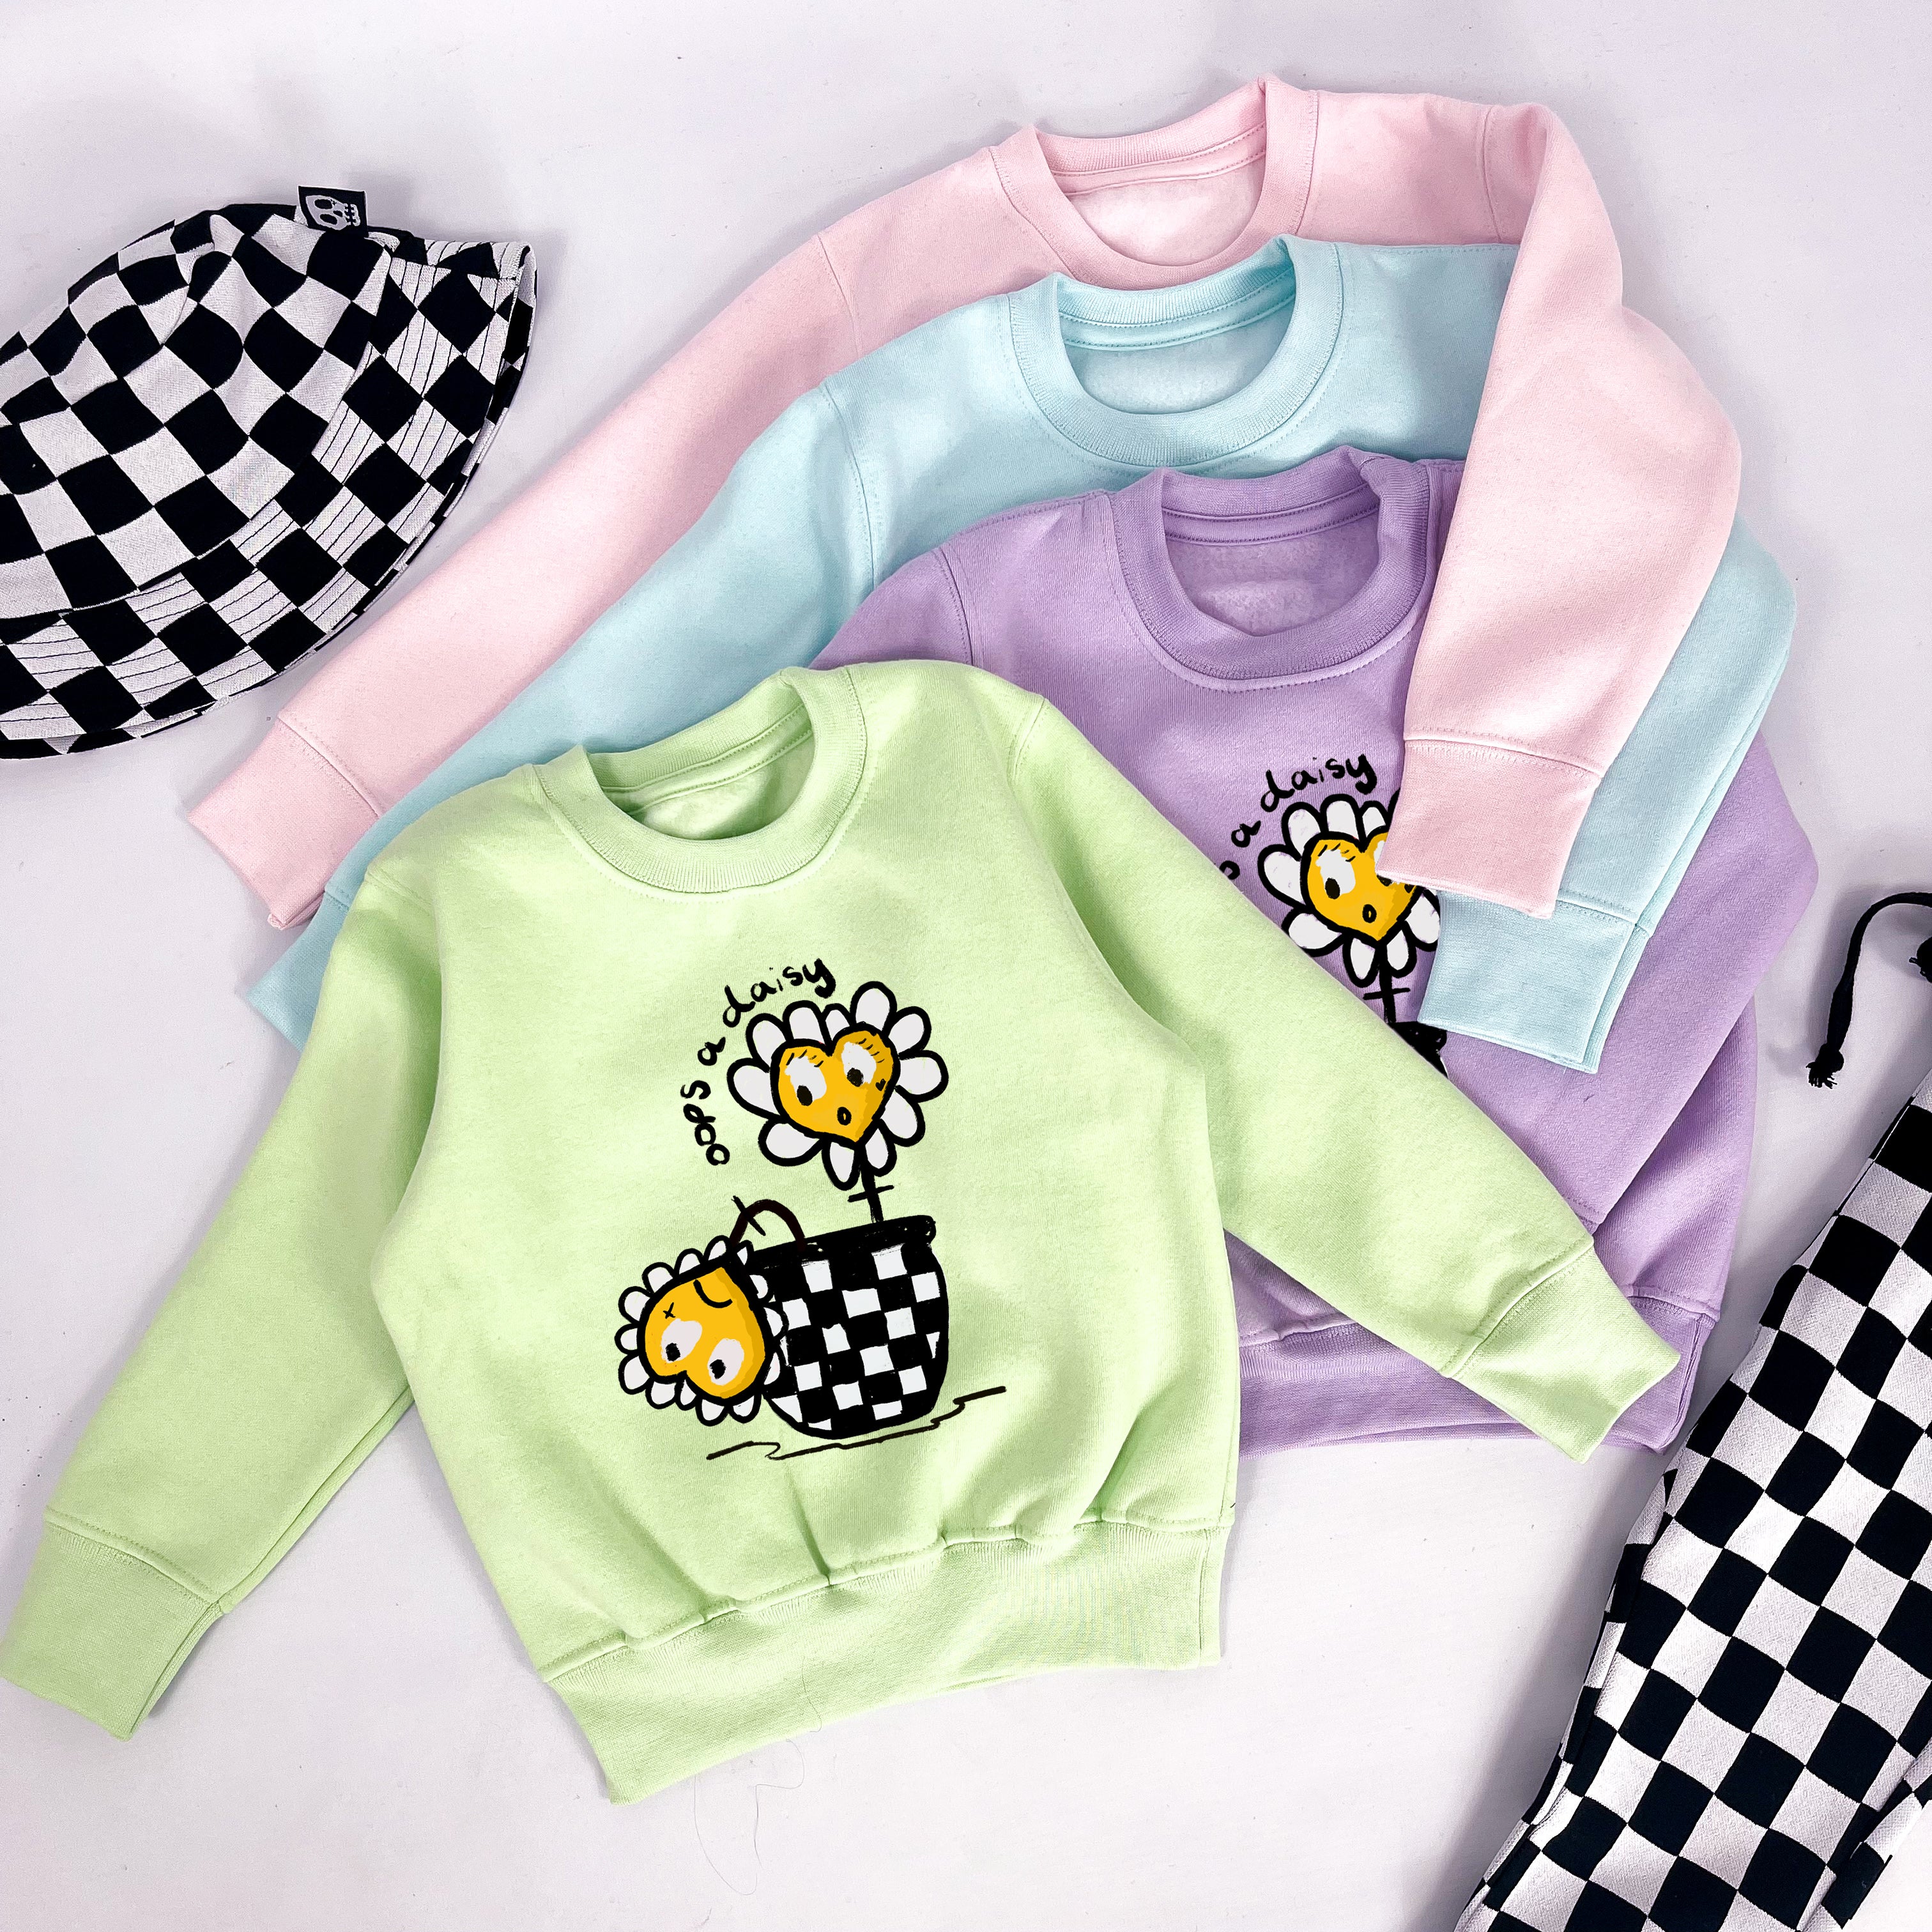 Kids Pastel Sweatshirt - "Oops a Daisy" Design - skeletots.co.uk